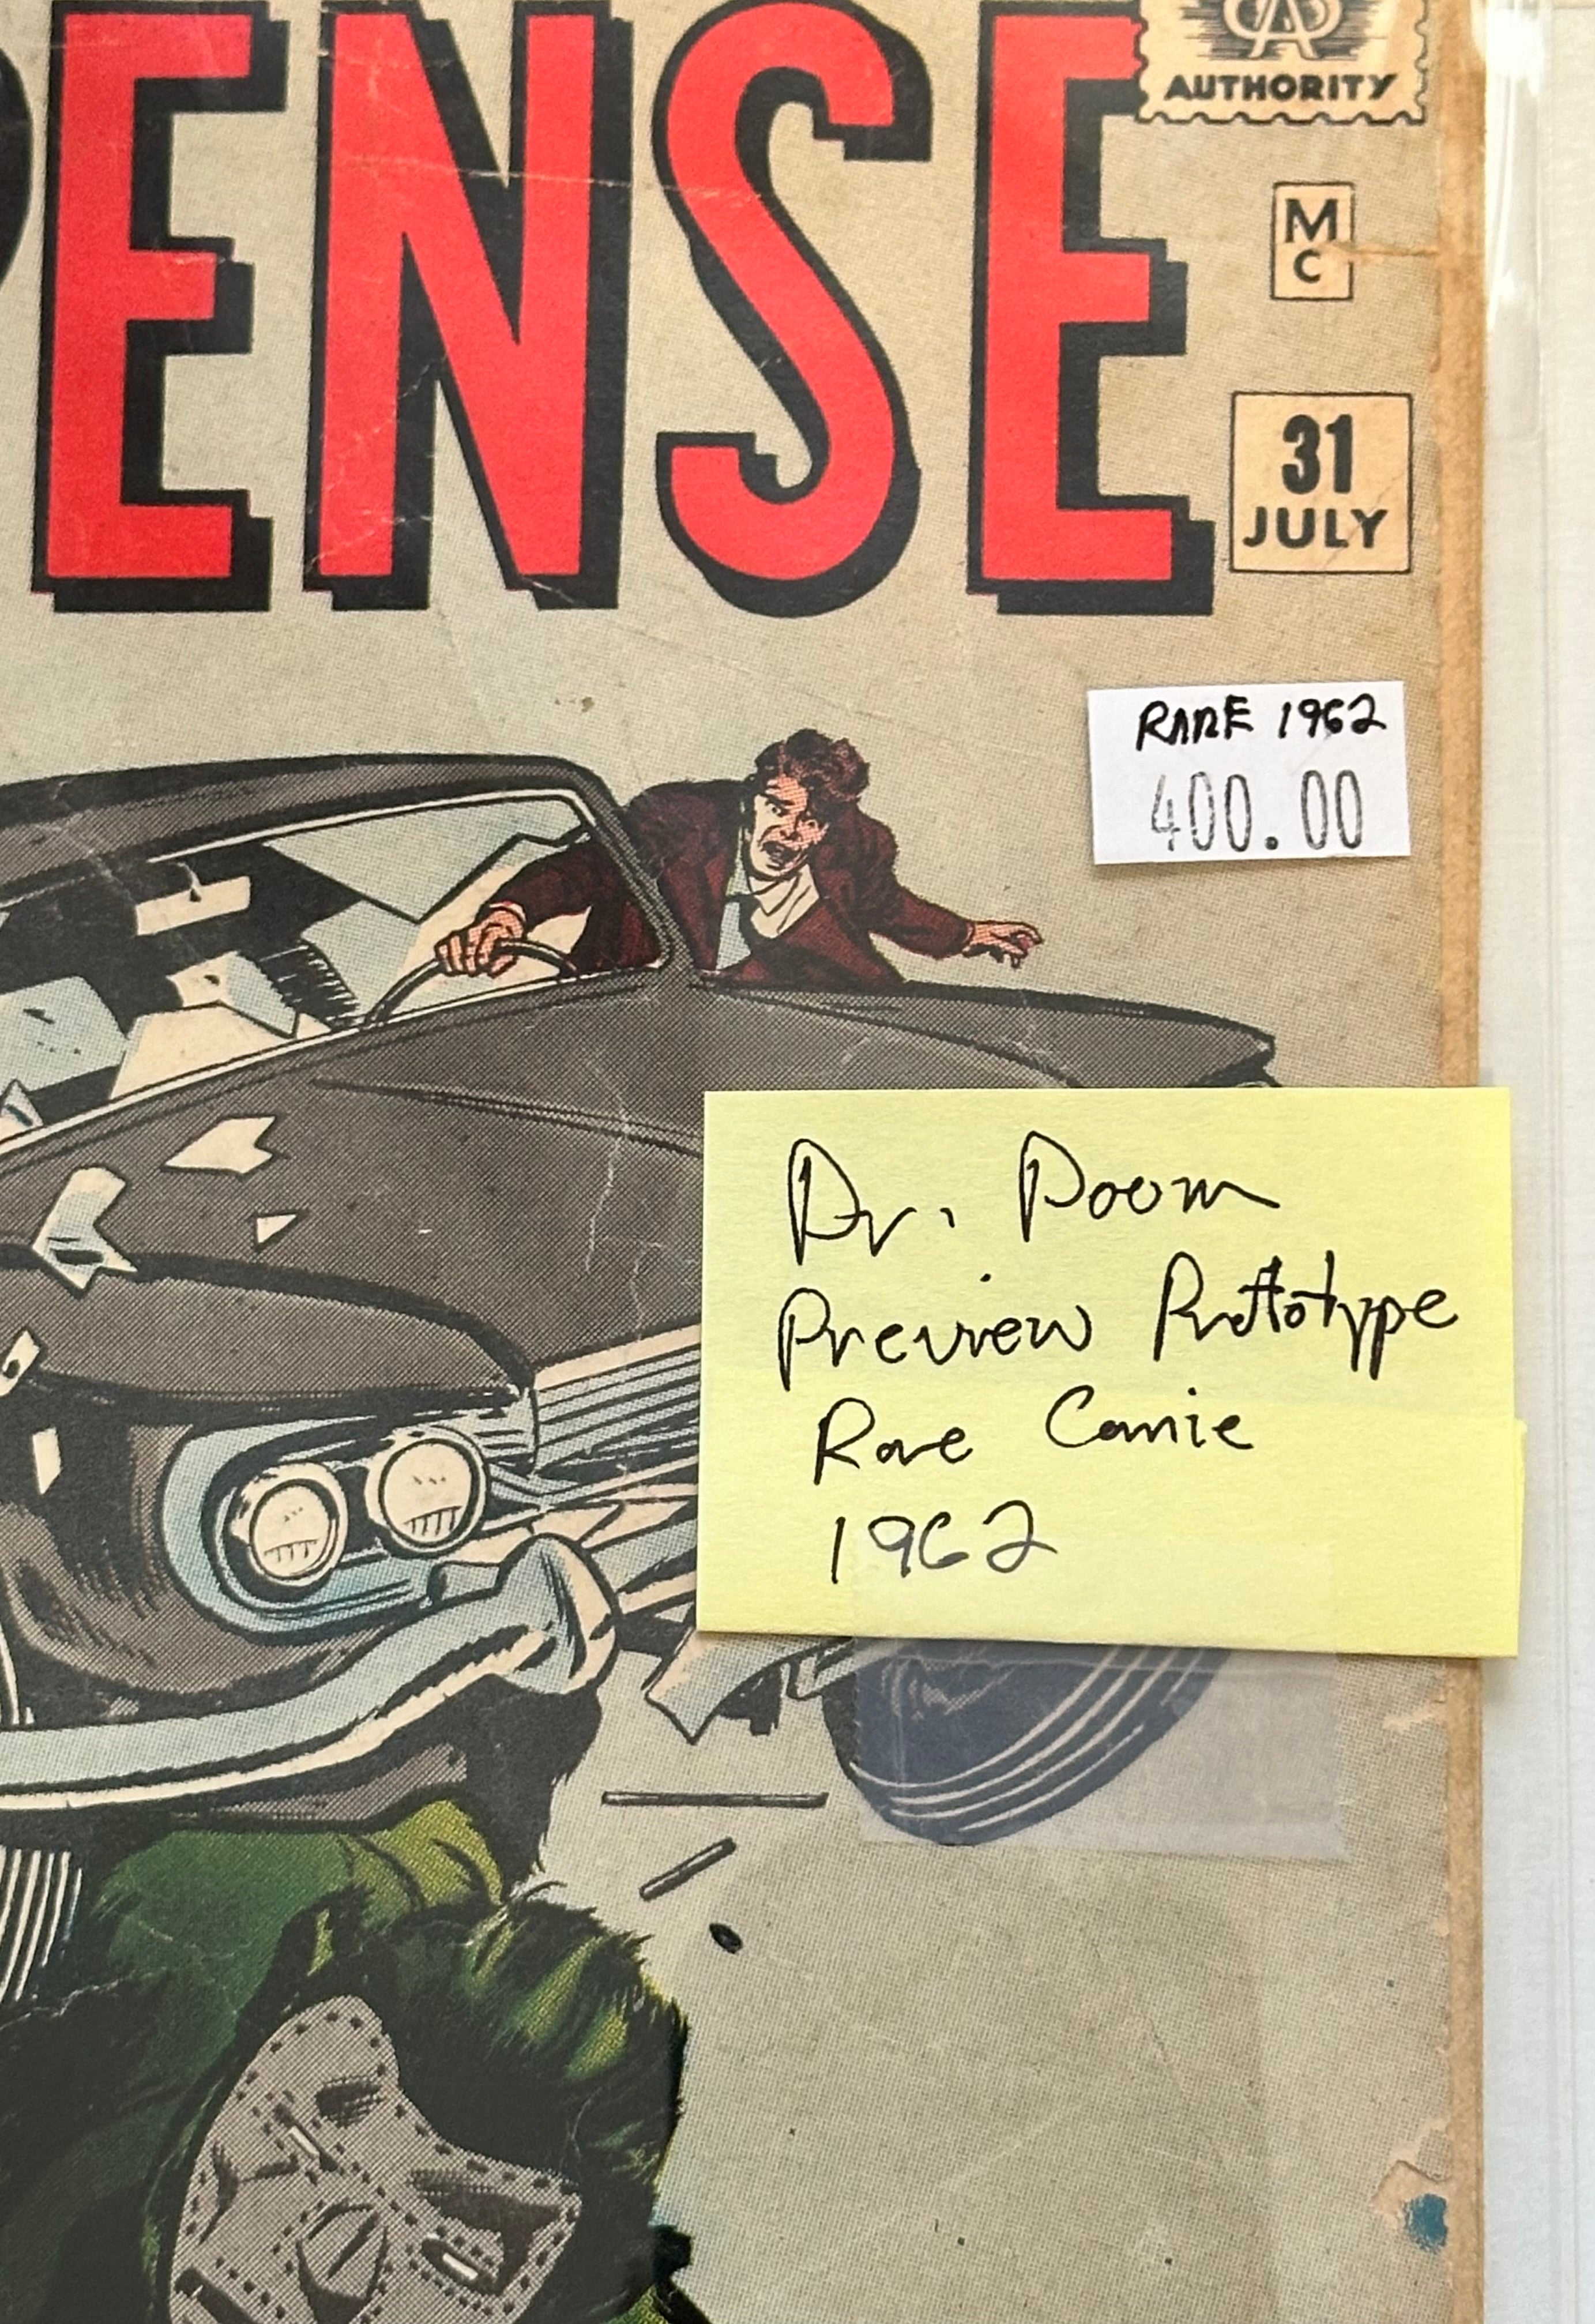 Tales of Suspense #31 Rare Doctor Doom first Prototype story Marvel Comics 1962